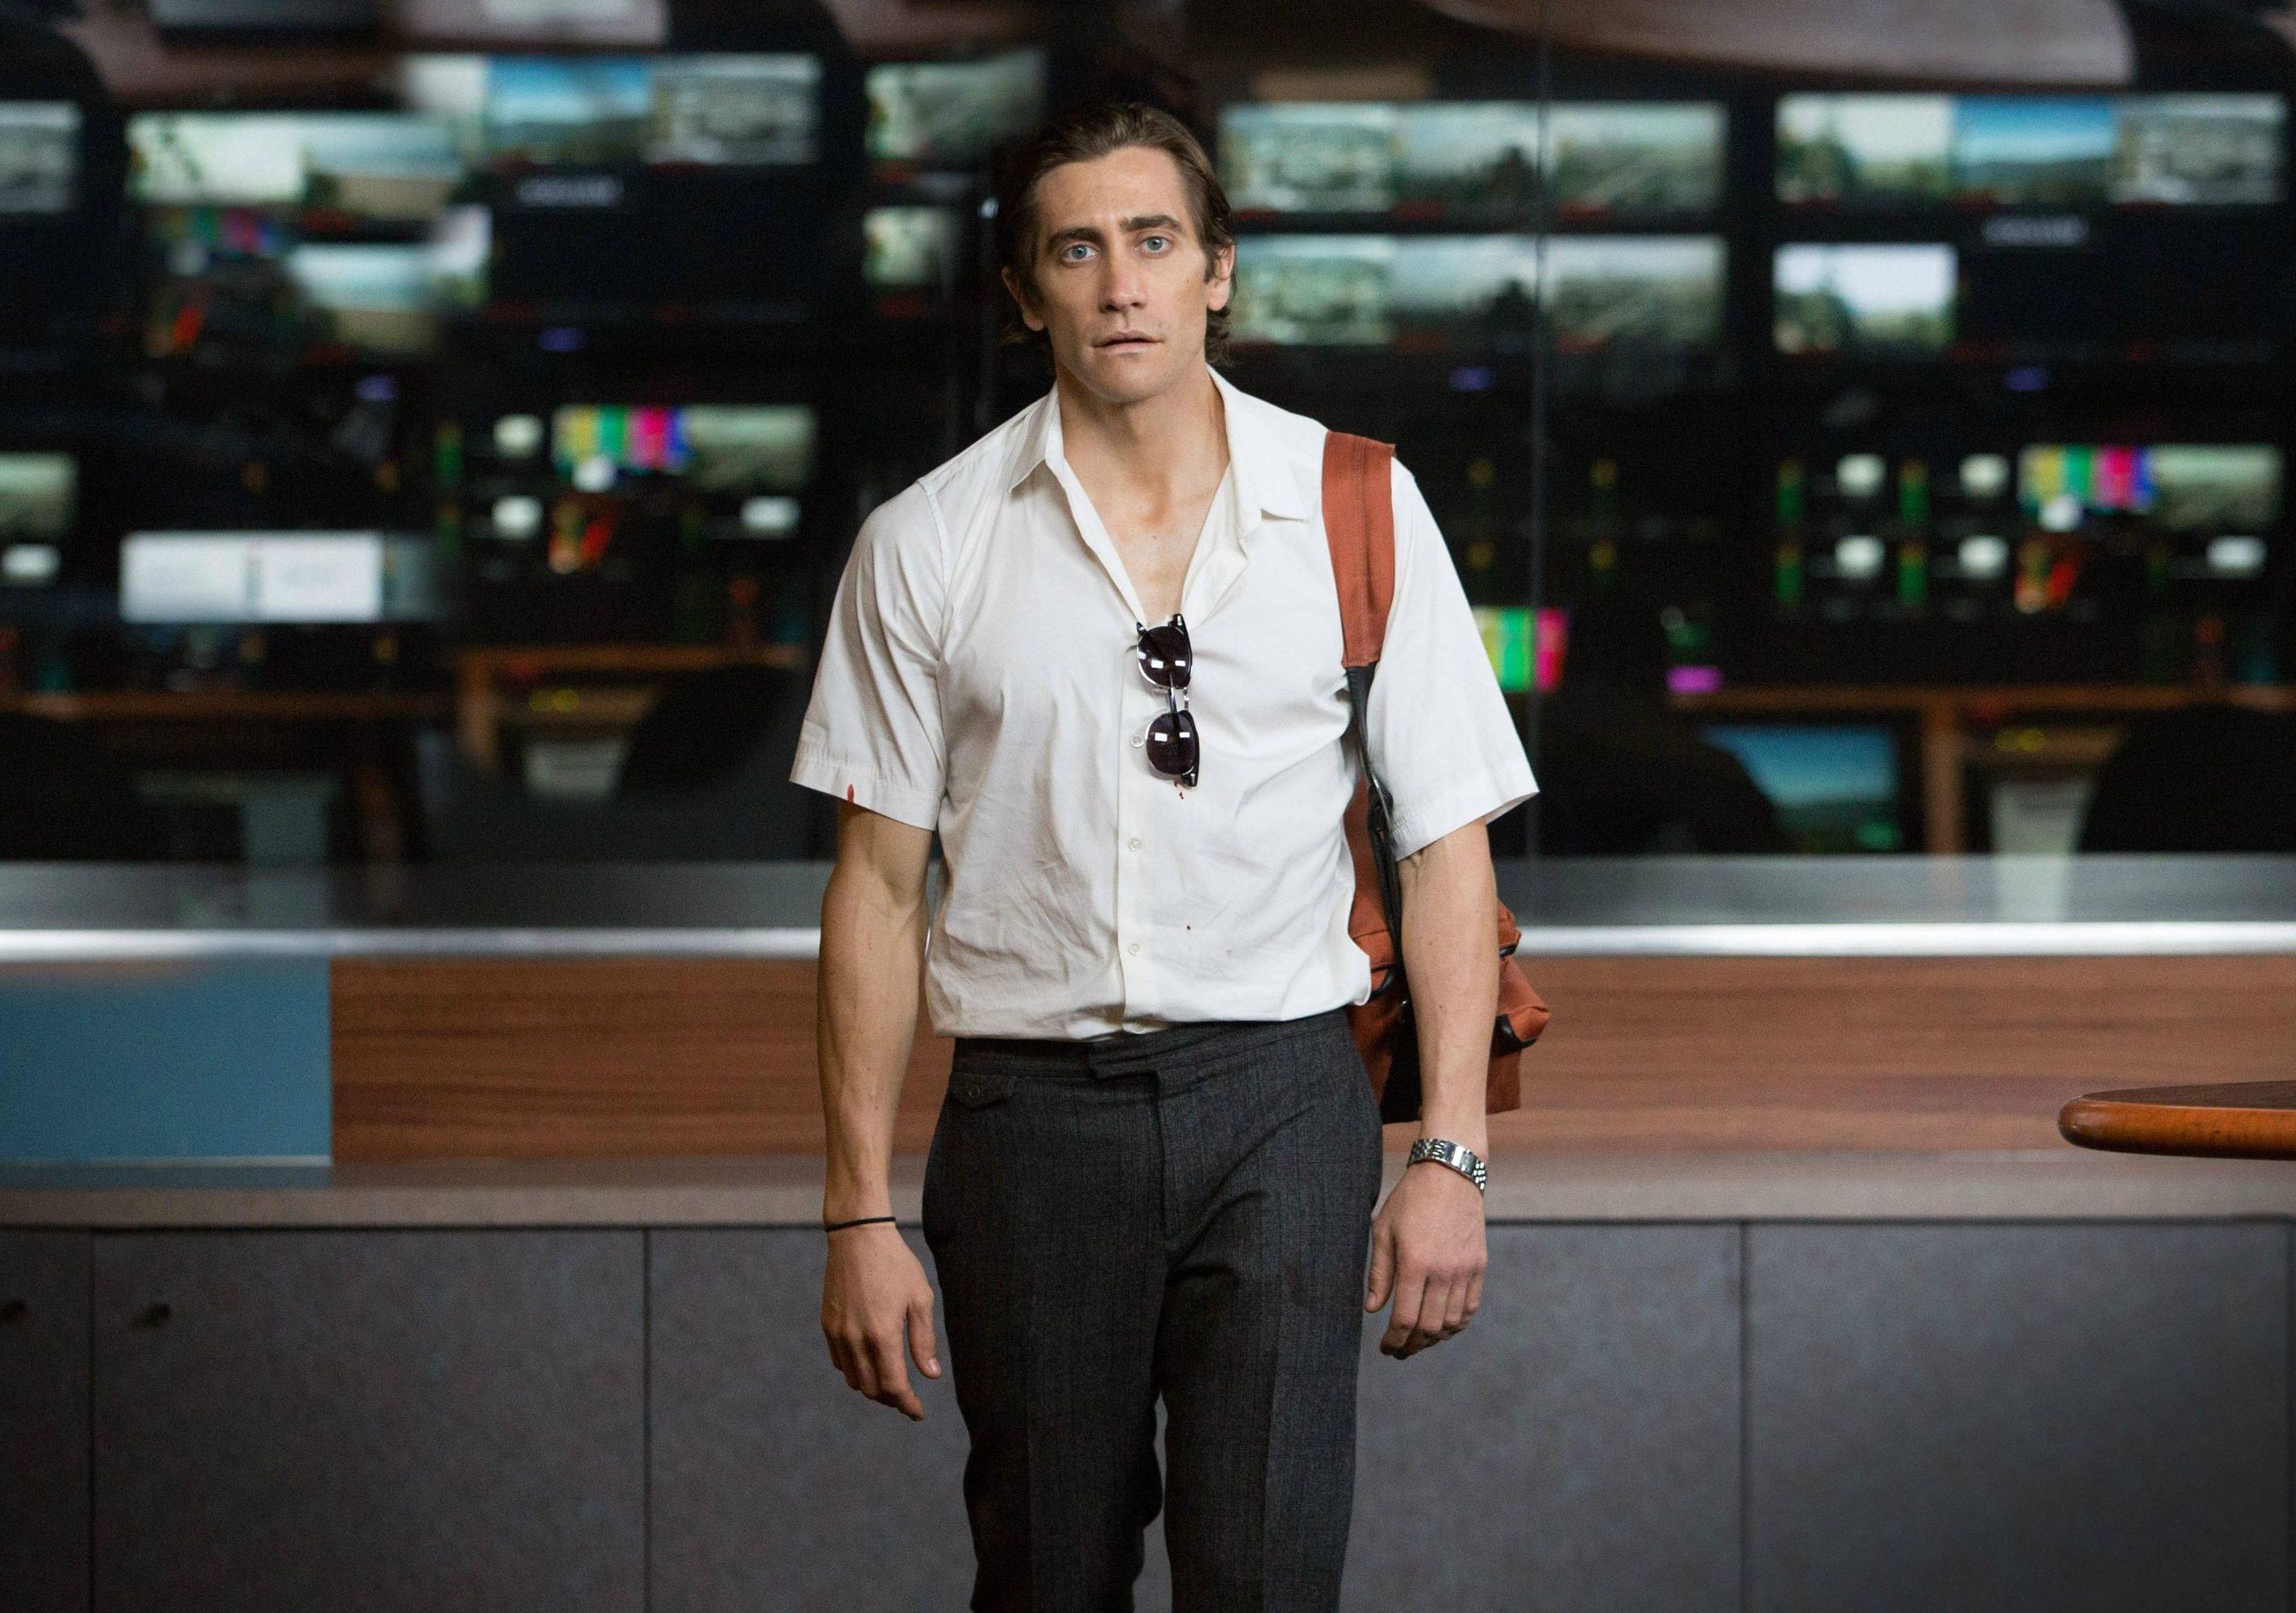 Jake Gyllenhaal distraught in the TV studio, Nightcrawler